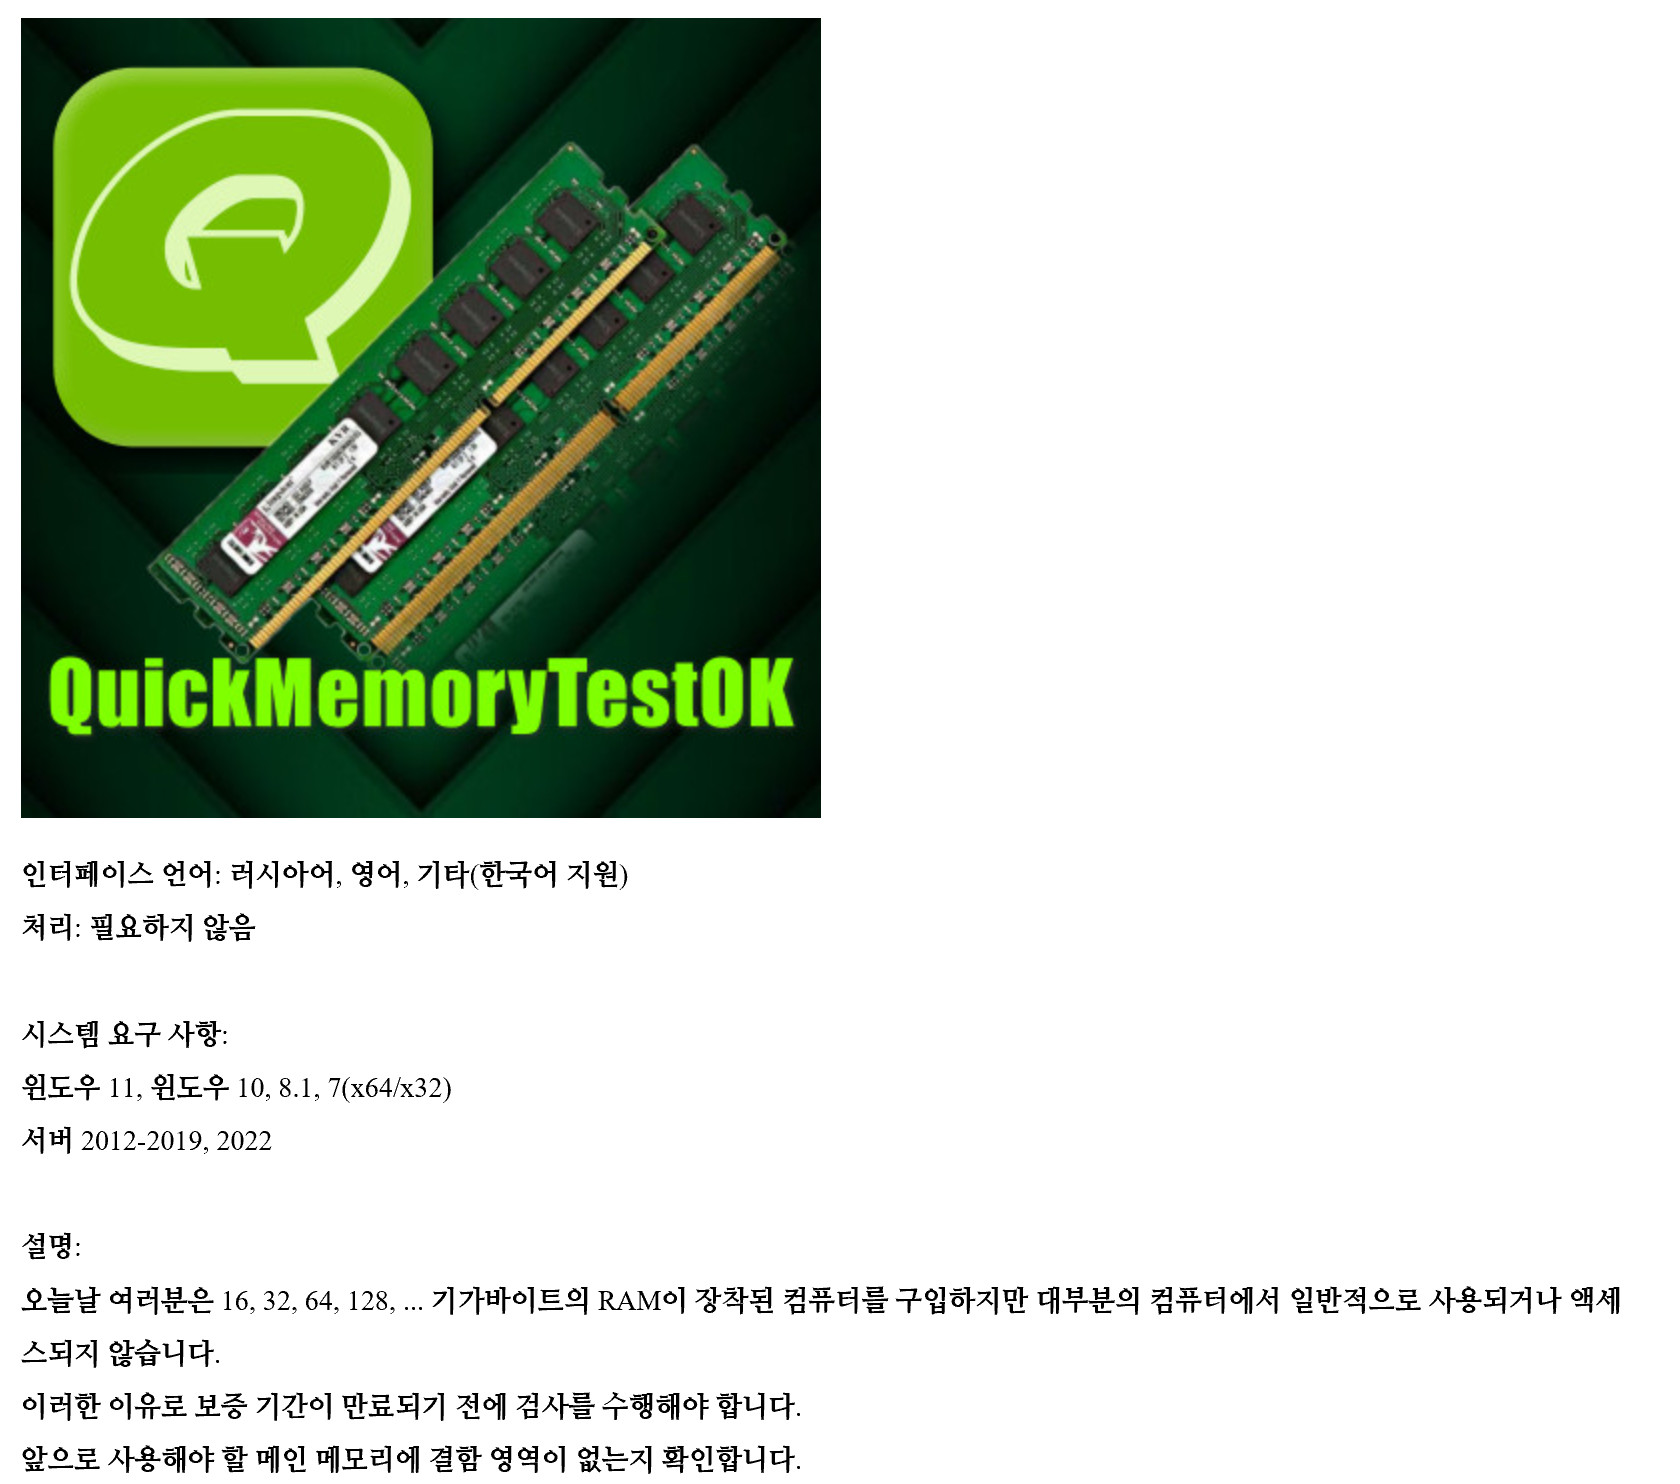 QuickMemoryTestOK 4.68 for ios download free